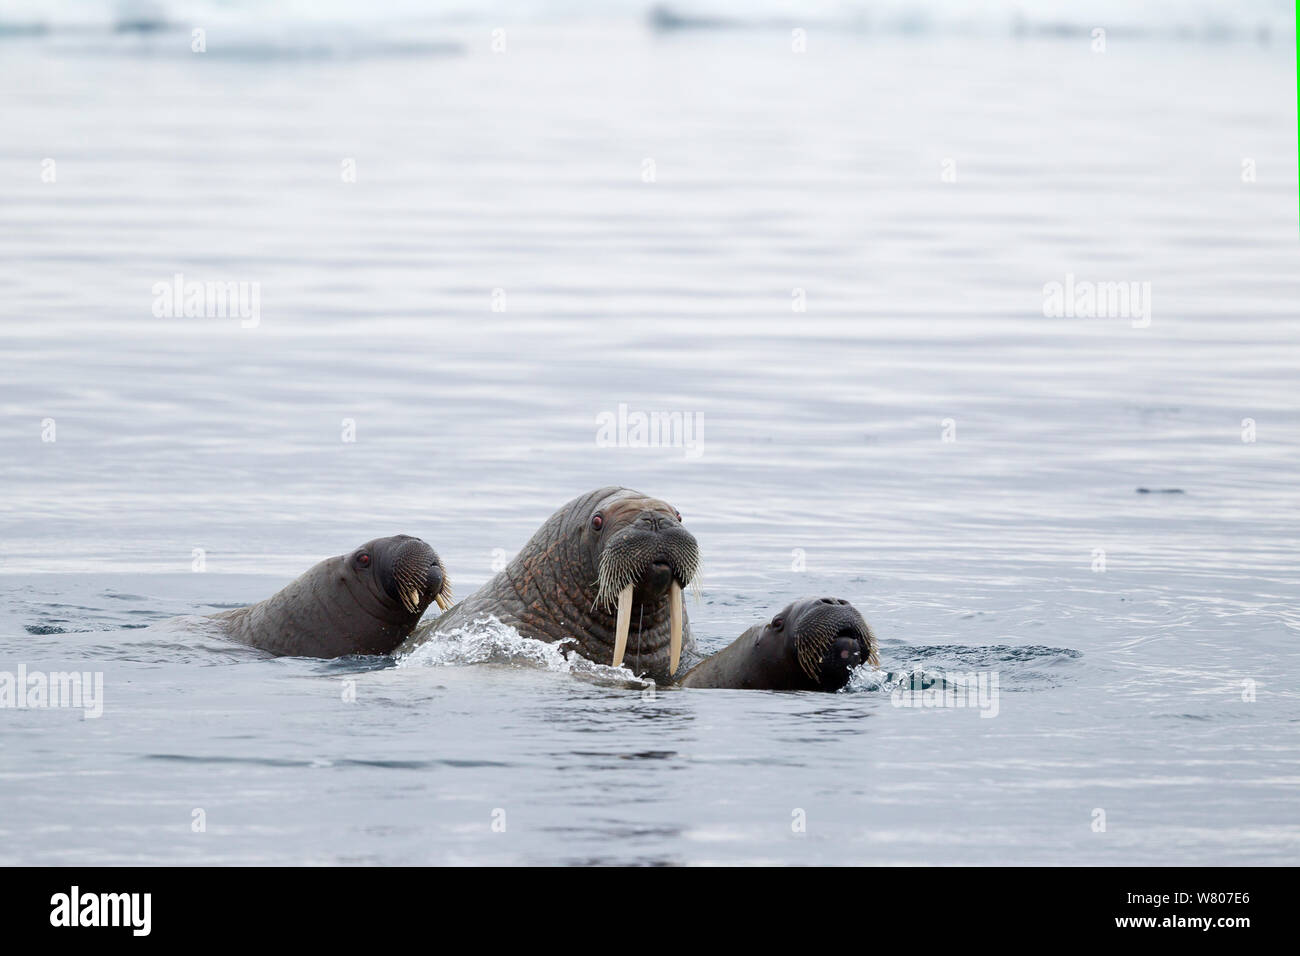 Walrus (Odobenus rosmarus) with juveniles, hauled out in shallow water, Spitsbergen, Svalbard Archipelago, Norway, Arctic Ocean. July. Stock Photo